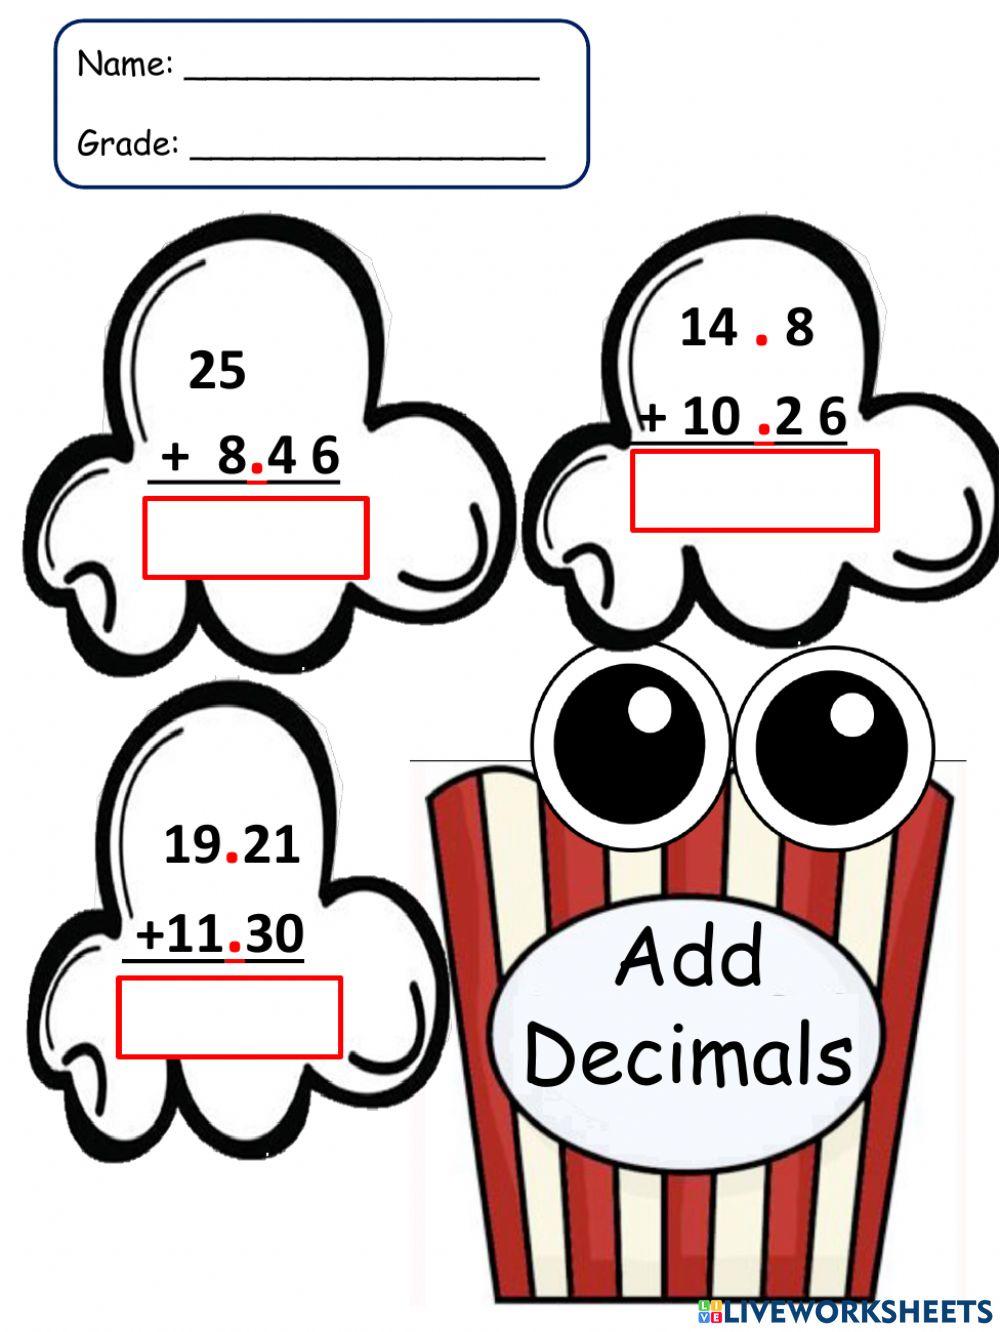 Add decimals